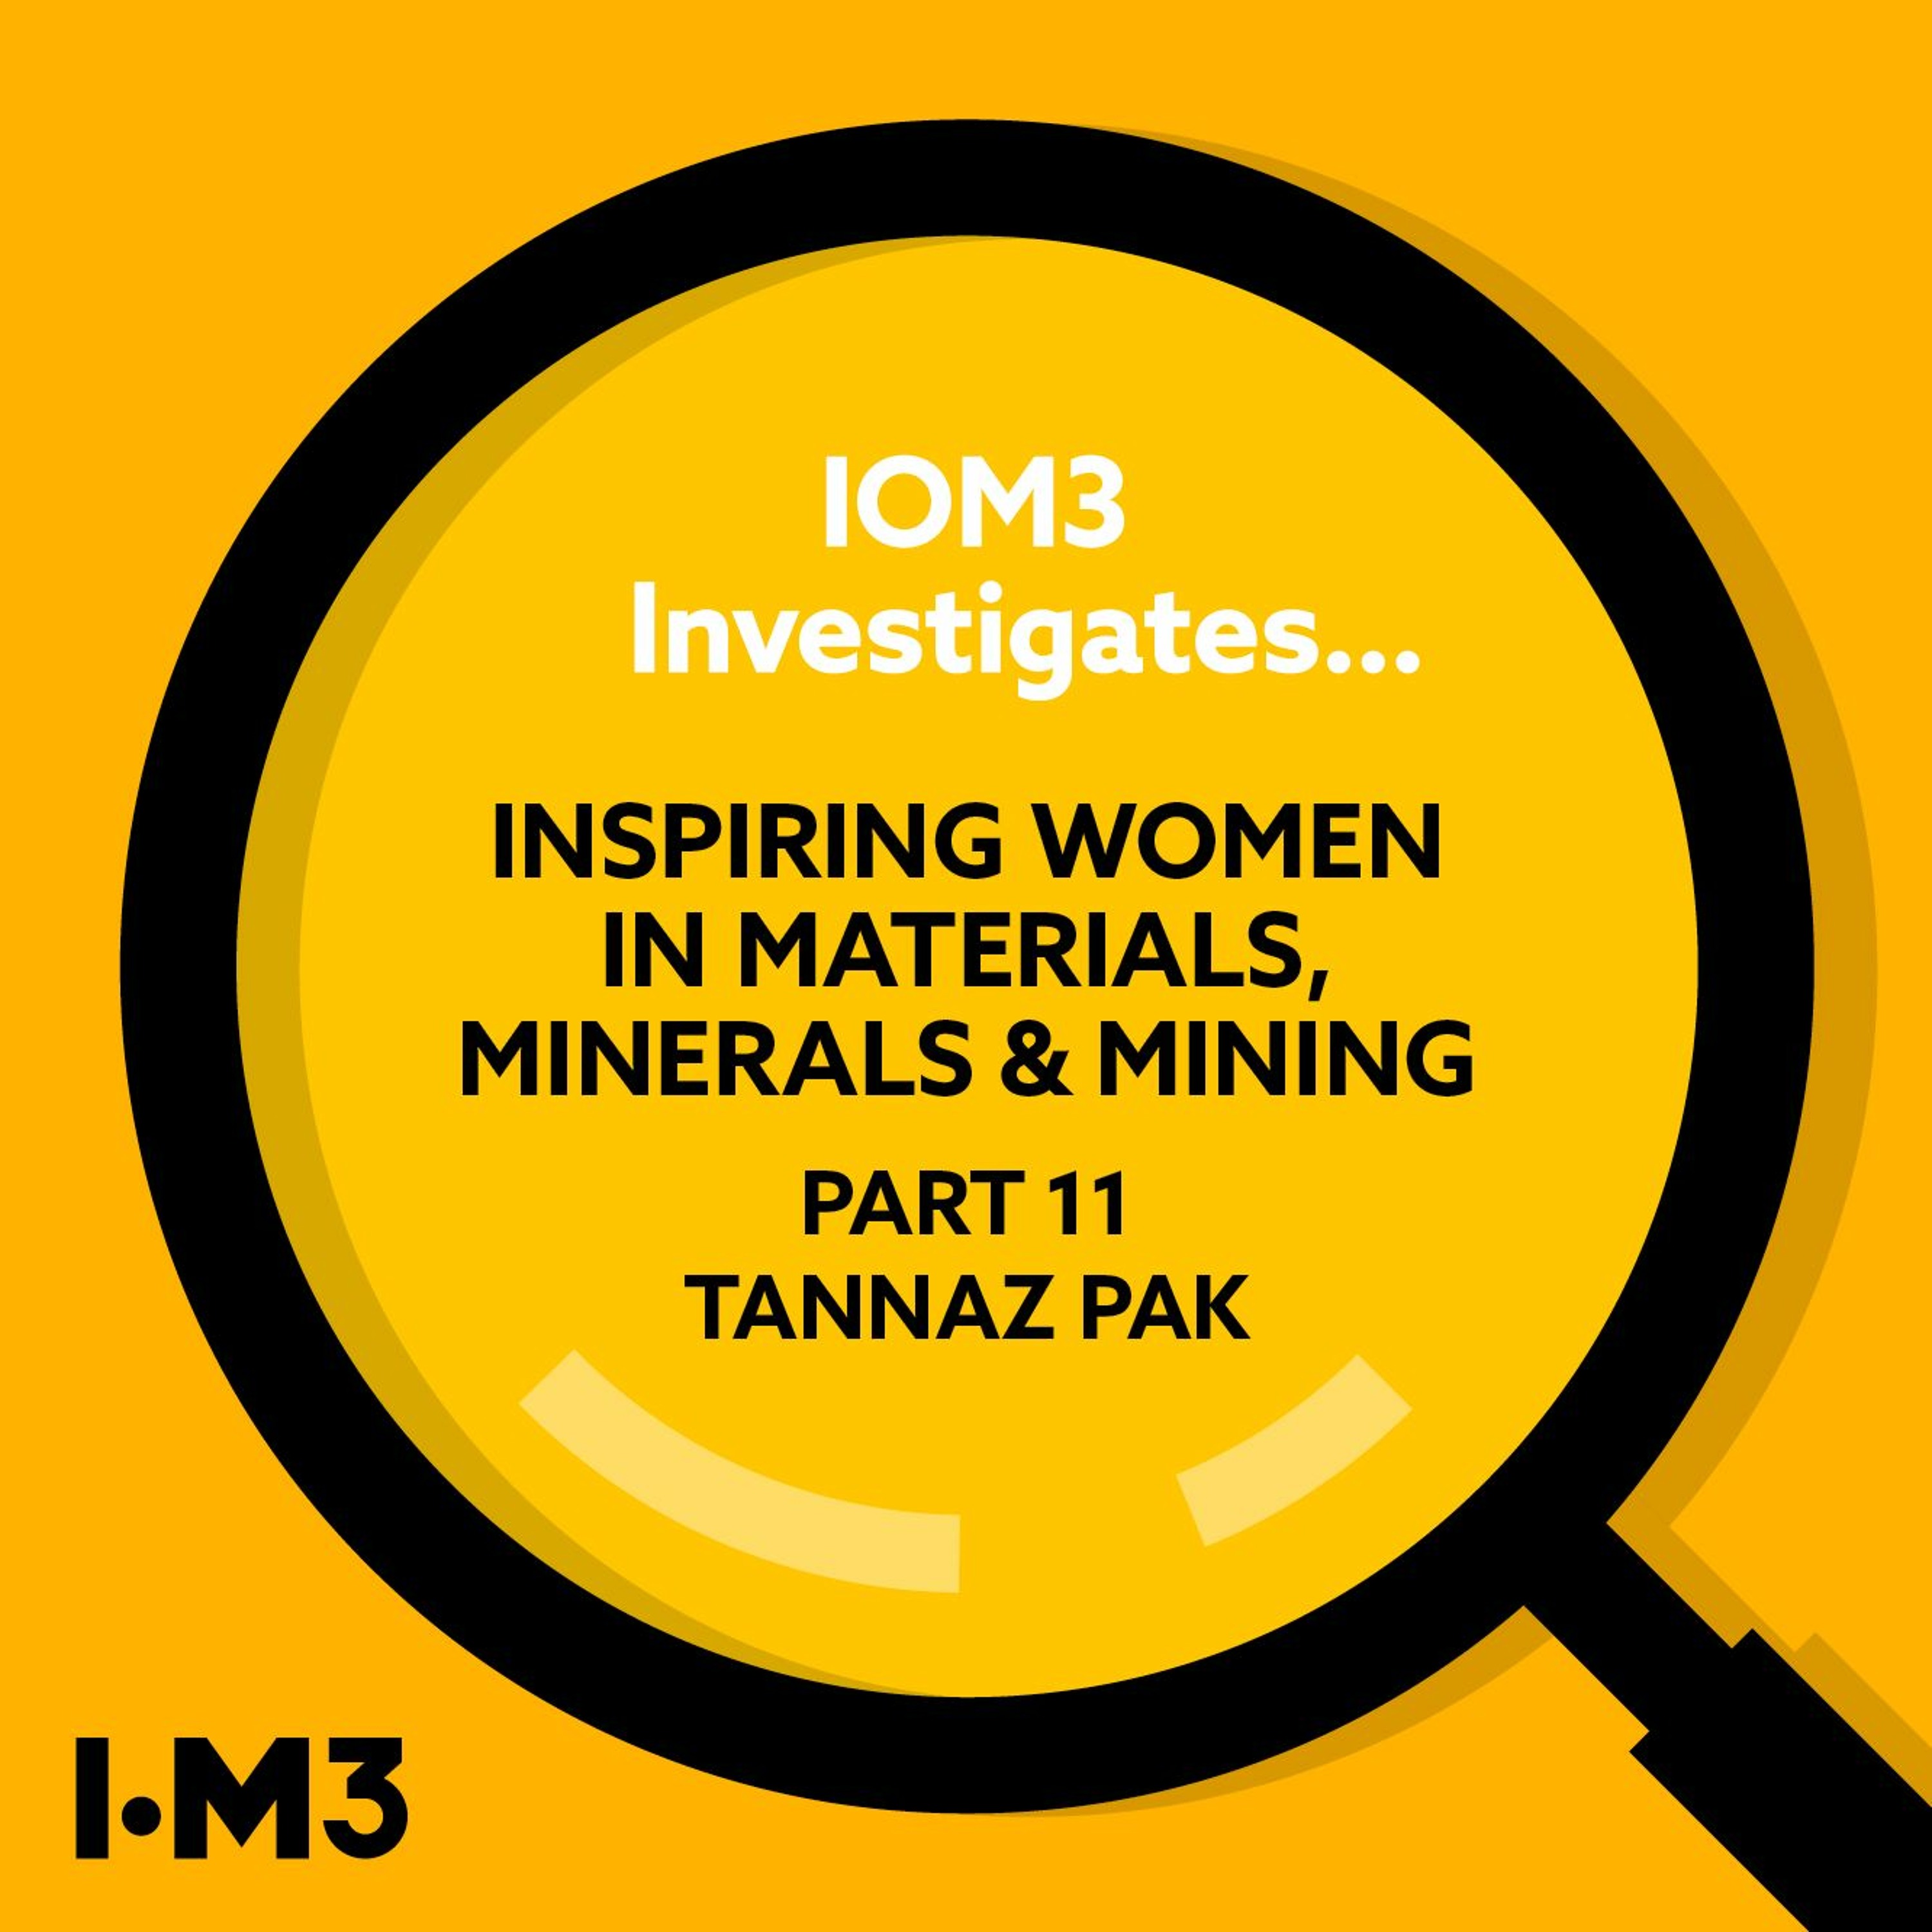 IOM3 Investigates...Inspiring women in Materials, Minerals & Mining, Tannaz Pak